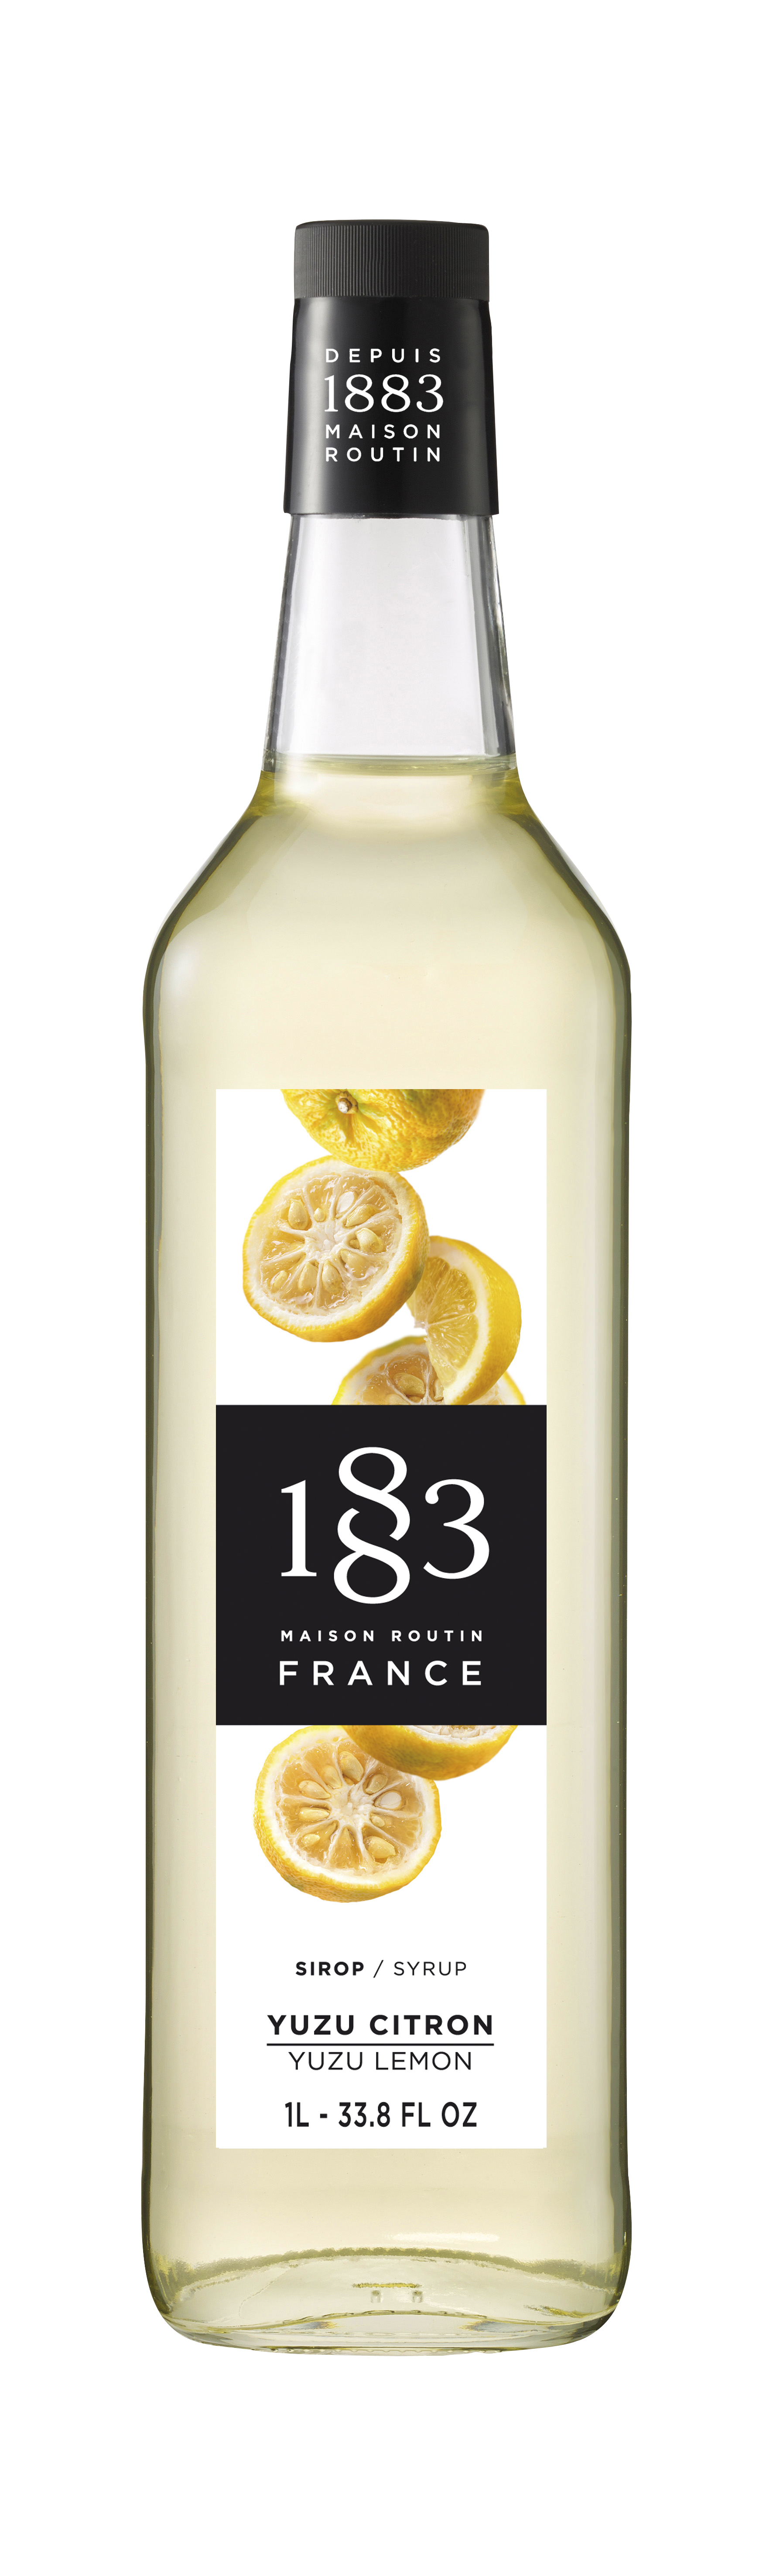 картинка Юзу японский лимон 1л сироп 1883 Рутин 